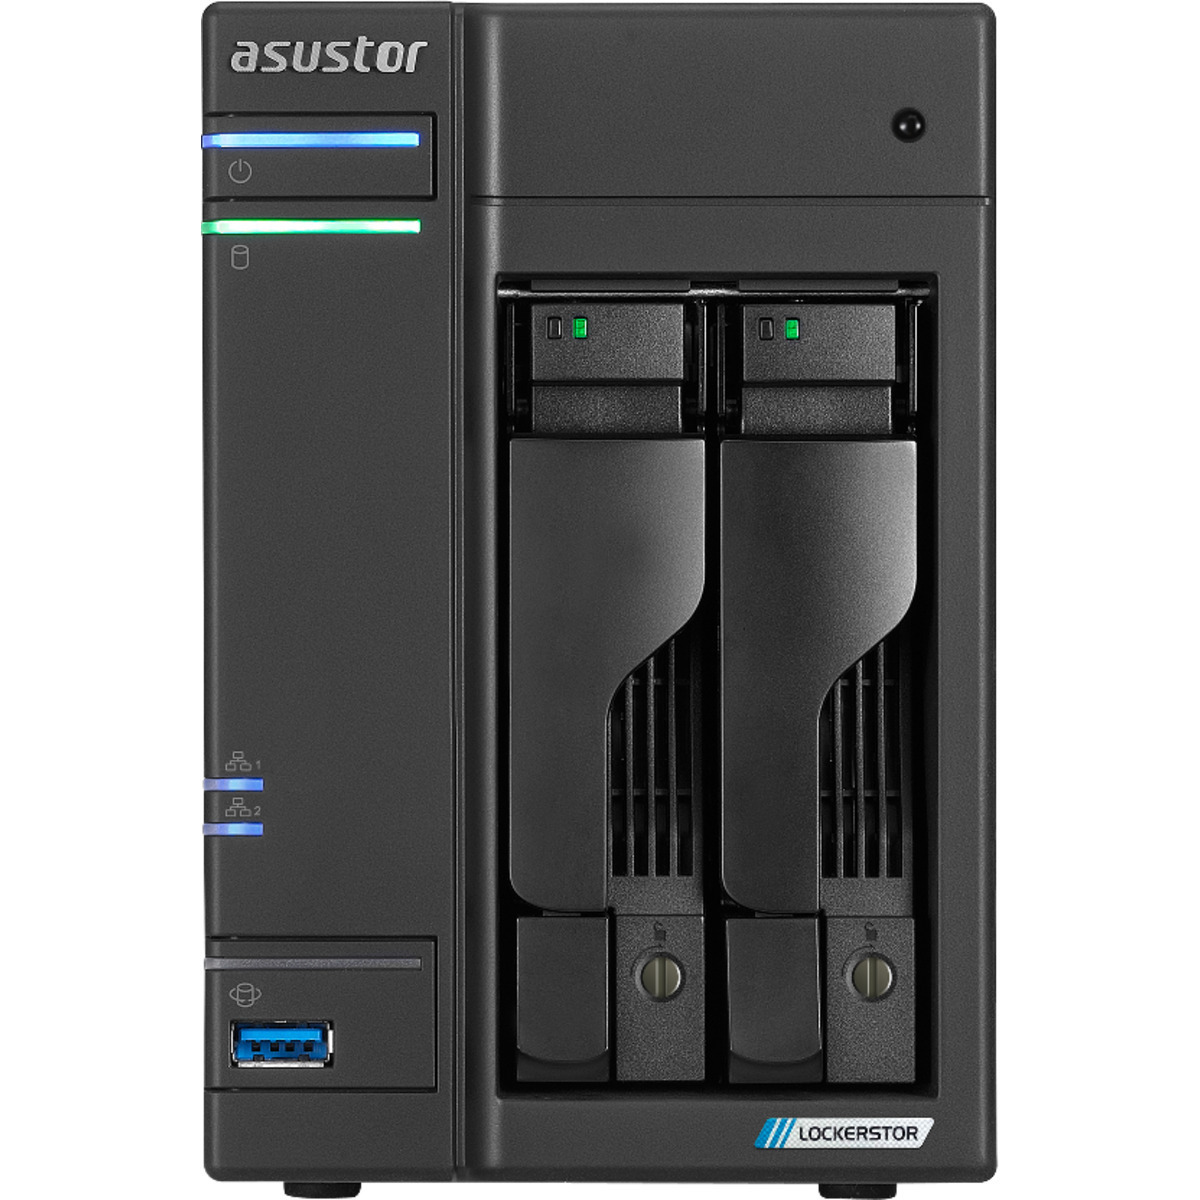 ASUSTOR LOCKERSTOR 2 Gen2 AS6702T 24tb 2-Bay Desktop Multimedia / Power User / Business NAS - Network Attached Storage Device 1x24tb Western Digital Ultrastar HC580 WUH722424ALE6L4 3.5 7200rpm SATA 6Gb/s HDD ENTERPRISE Class Drives Installed - Burn-In Tested - FREE RAM UPGRADE LOCKERSTOR 2 Gen2 AS6702T